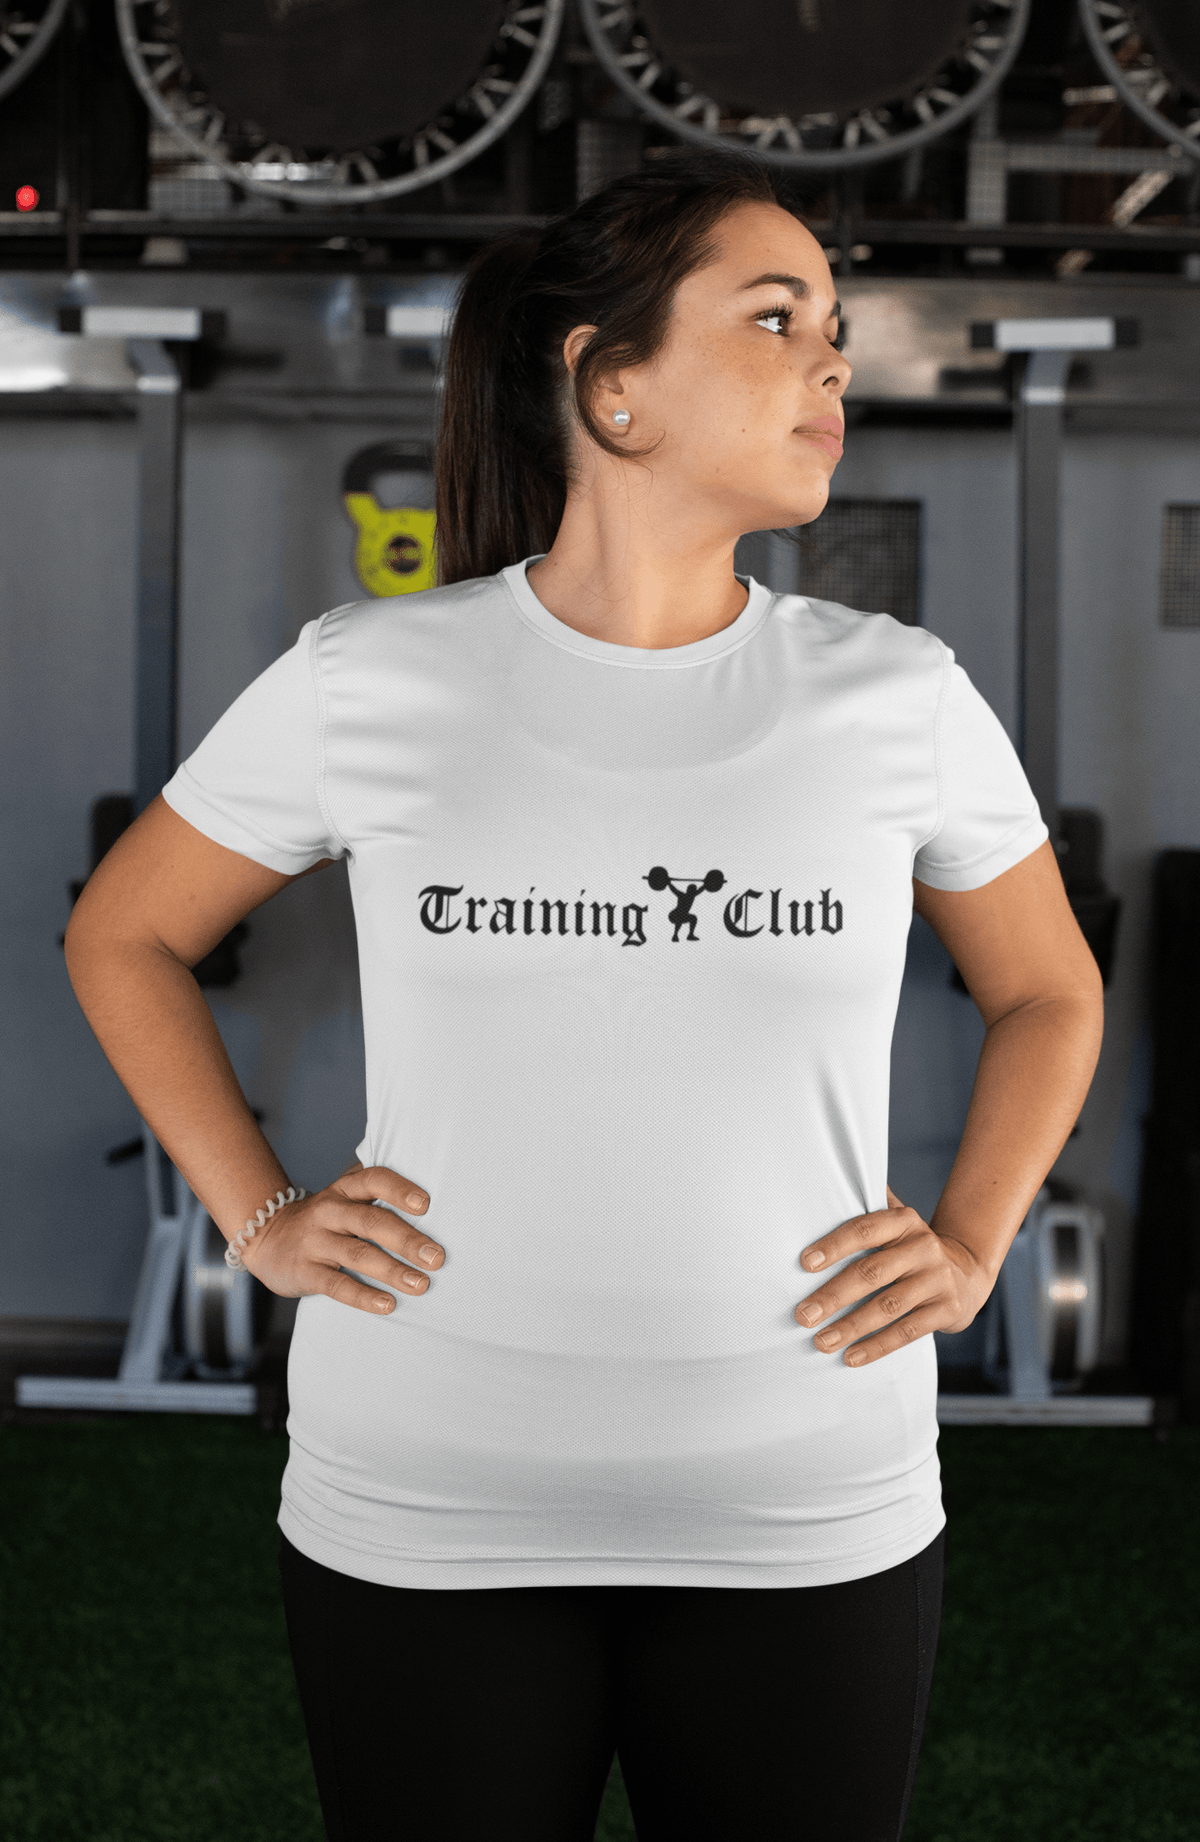 Training Club Sports and Gym White Unisex T-Shirt